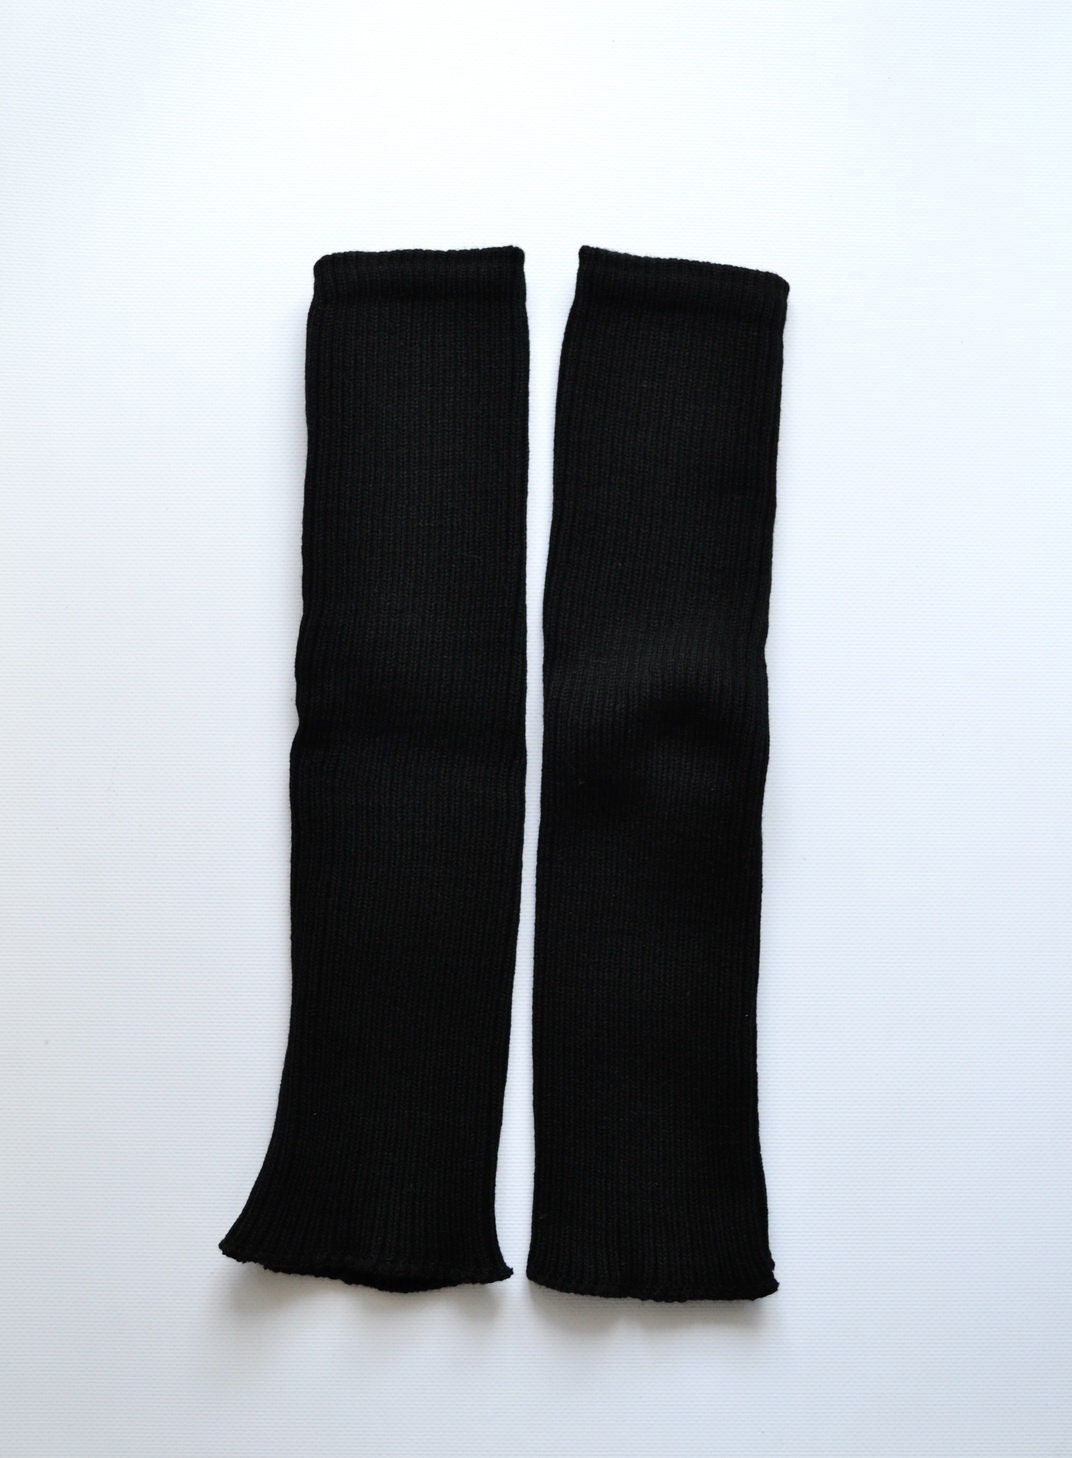 Yoga socks knit Black yoga socks Black leg warmers Yoga | Etsy